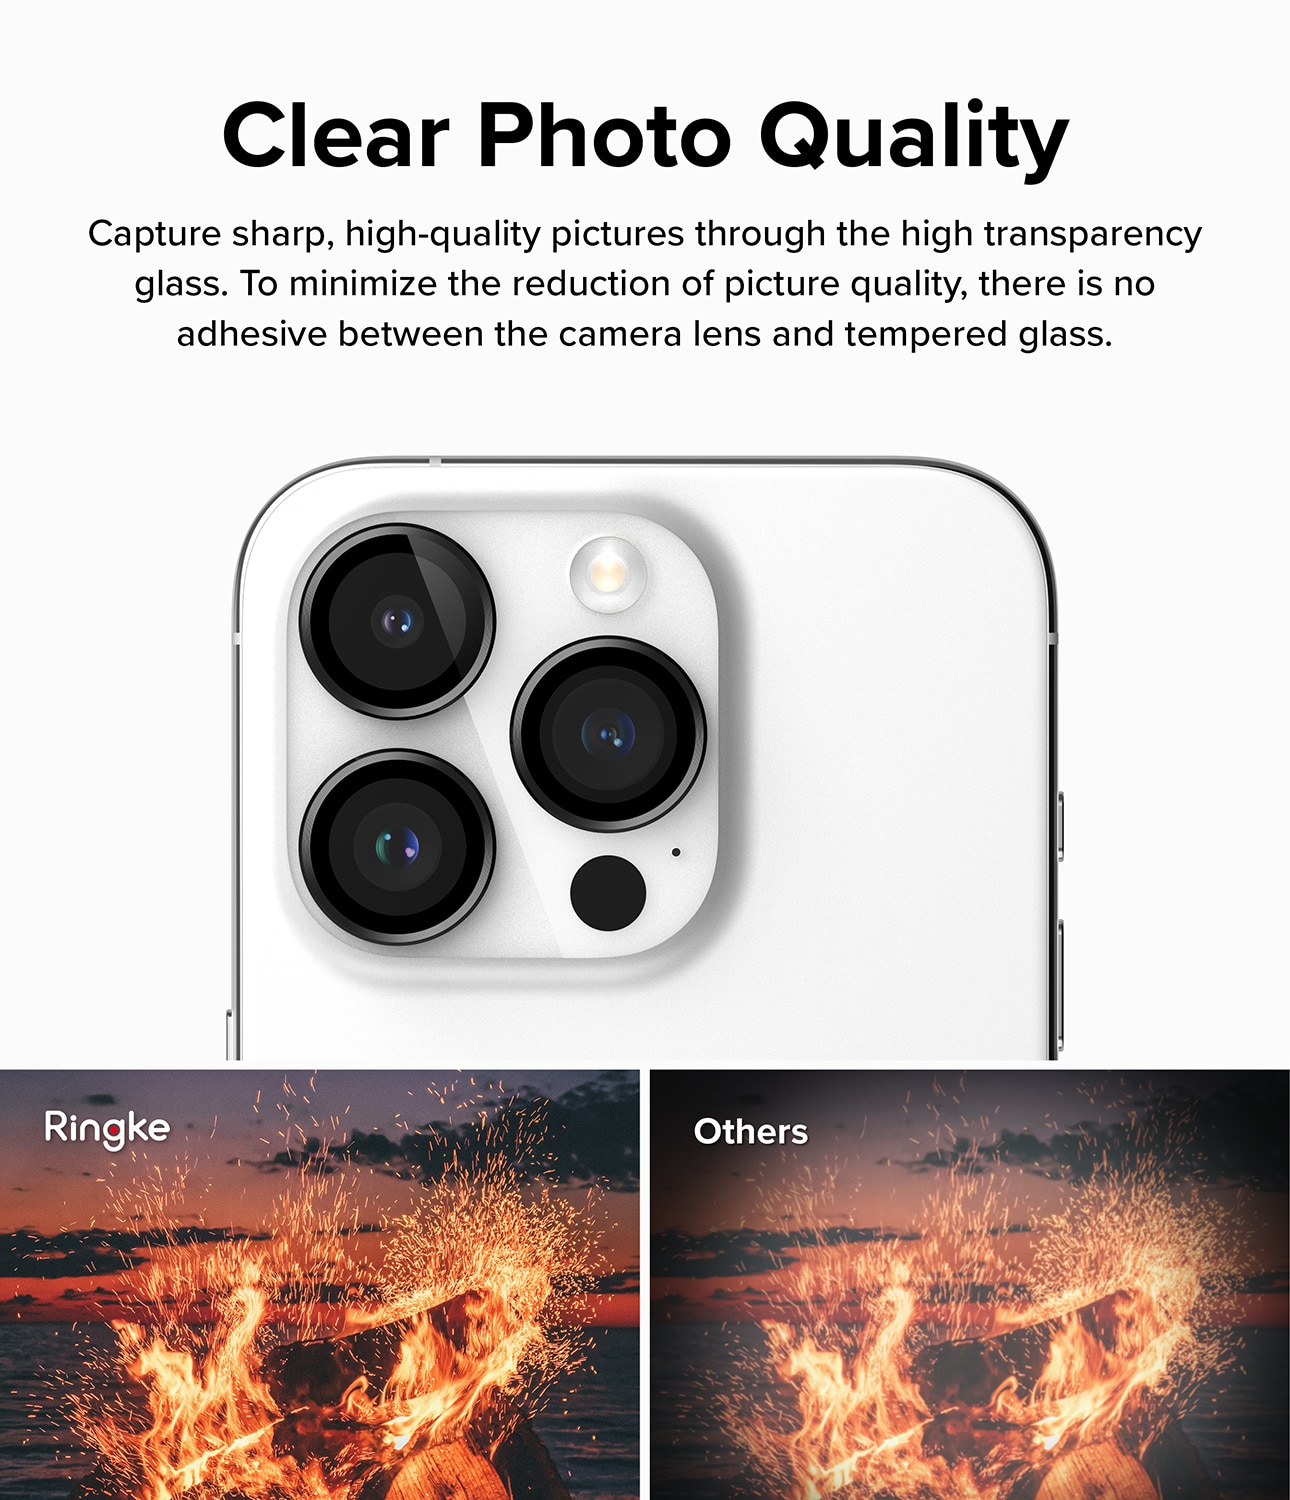 Camera Lens Frame Glass iPhone 15 Pro Max Black